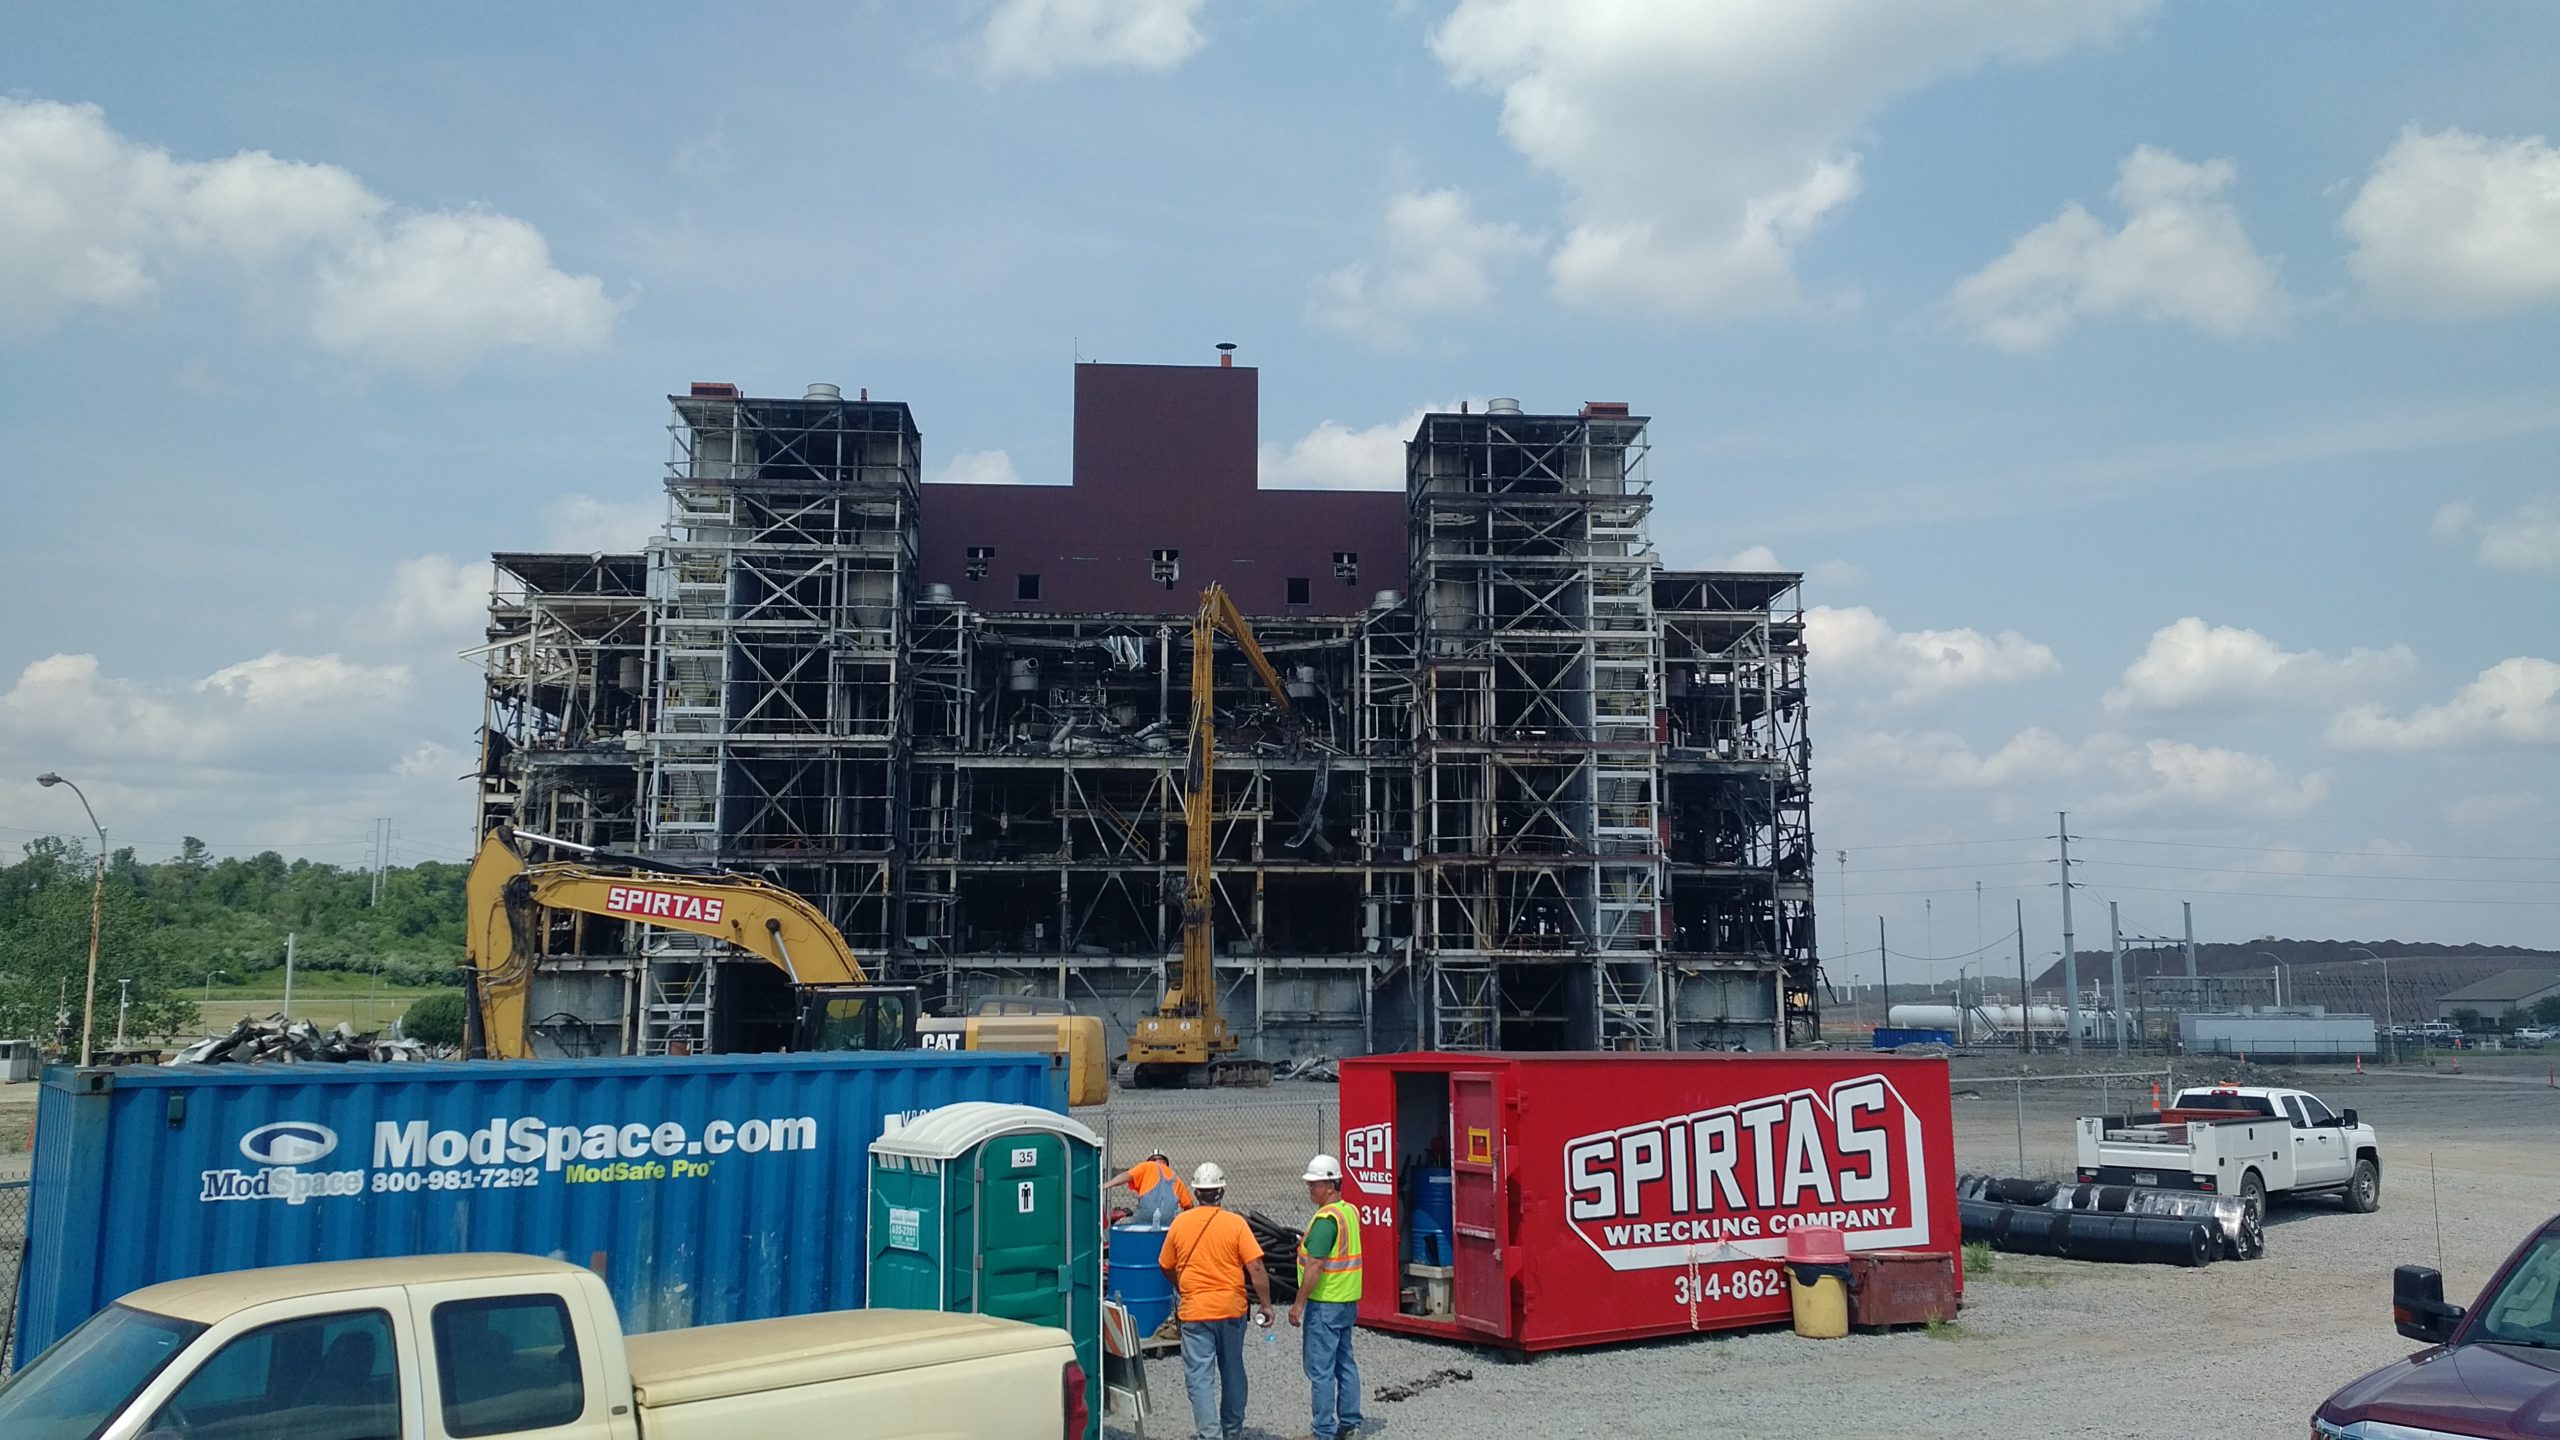 Spirtas wrecking Midwest building demolishing company